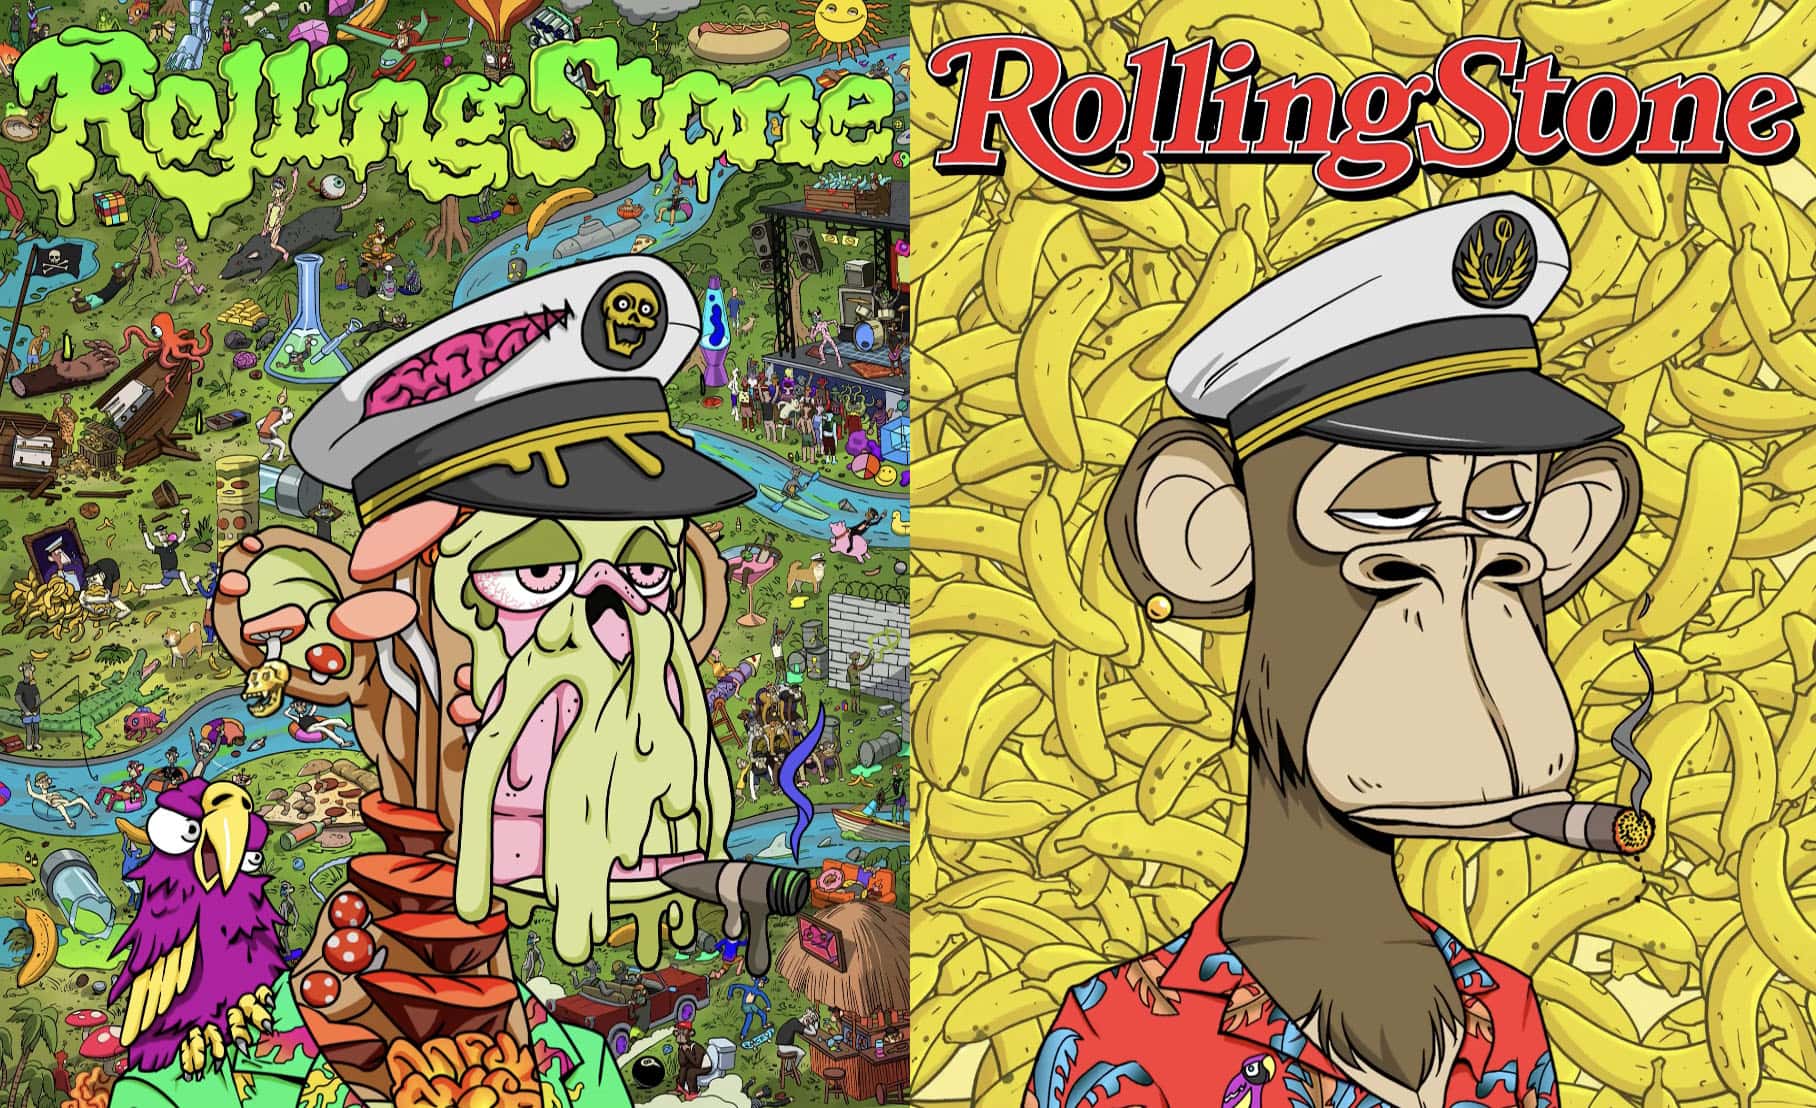 The Bored Apes выпустили NFT коллаборацию с Rolling Stone. Заглавный коллаж новости.